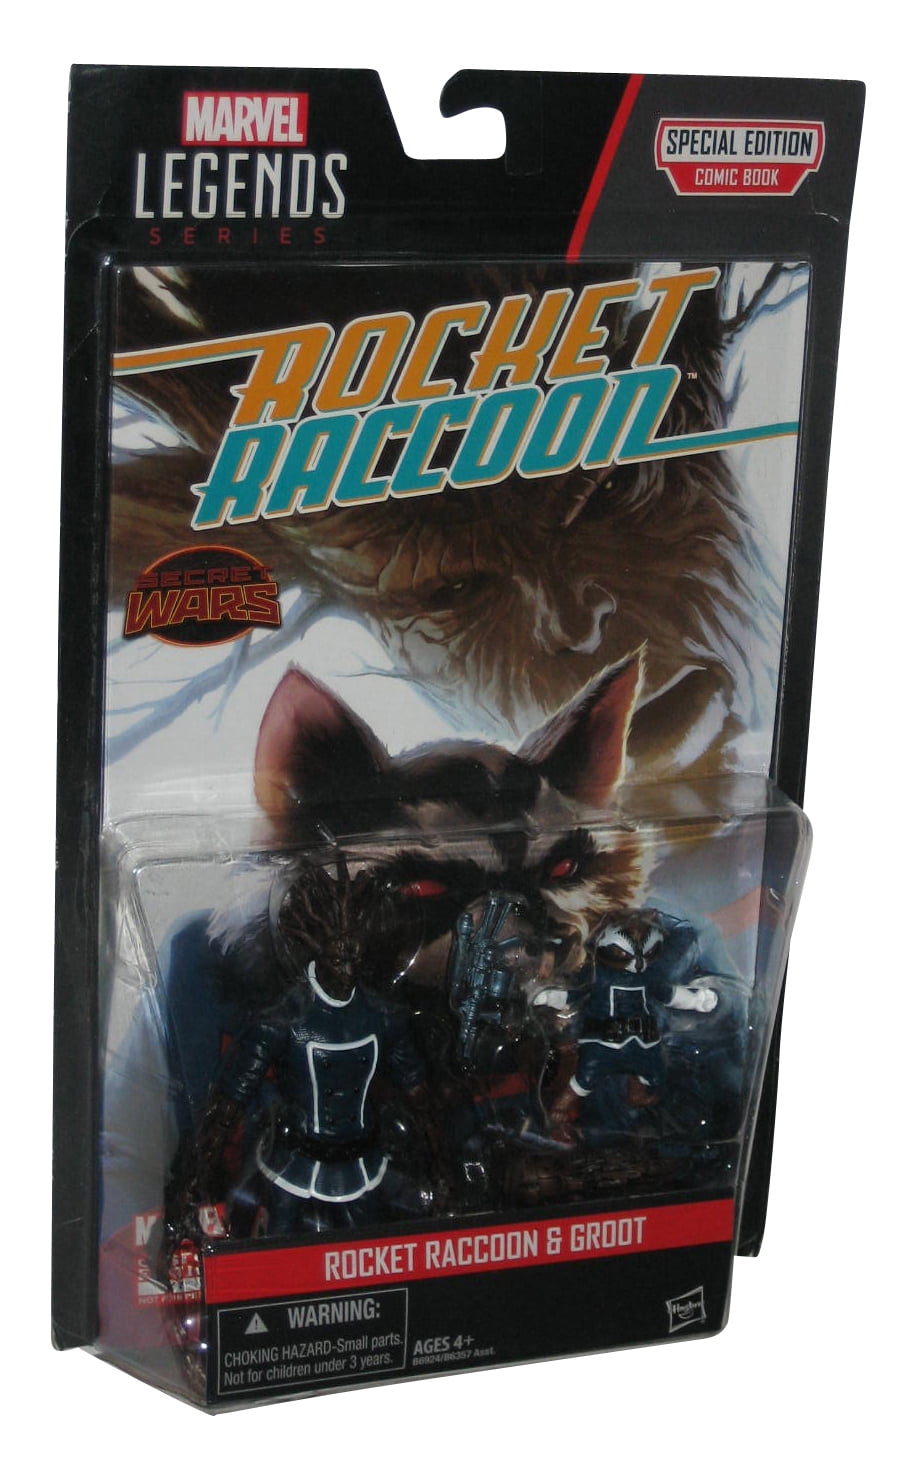 Marvel Legends ROCKET RACCOON 3.75 inch Action Figure Toy Gift 